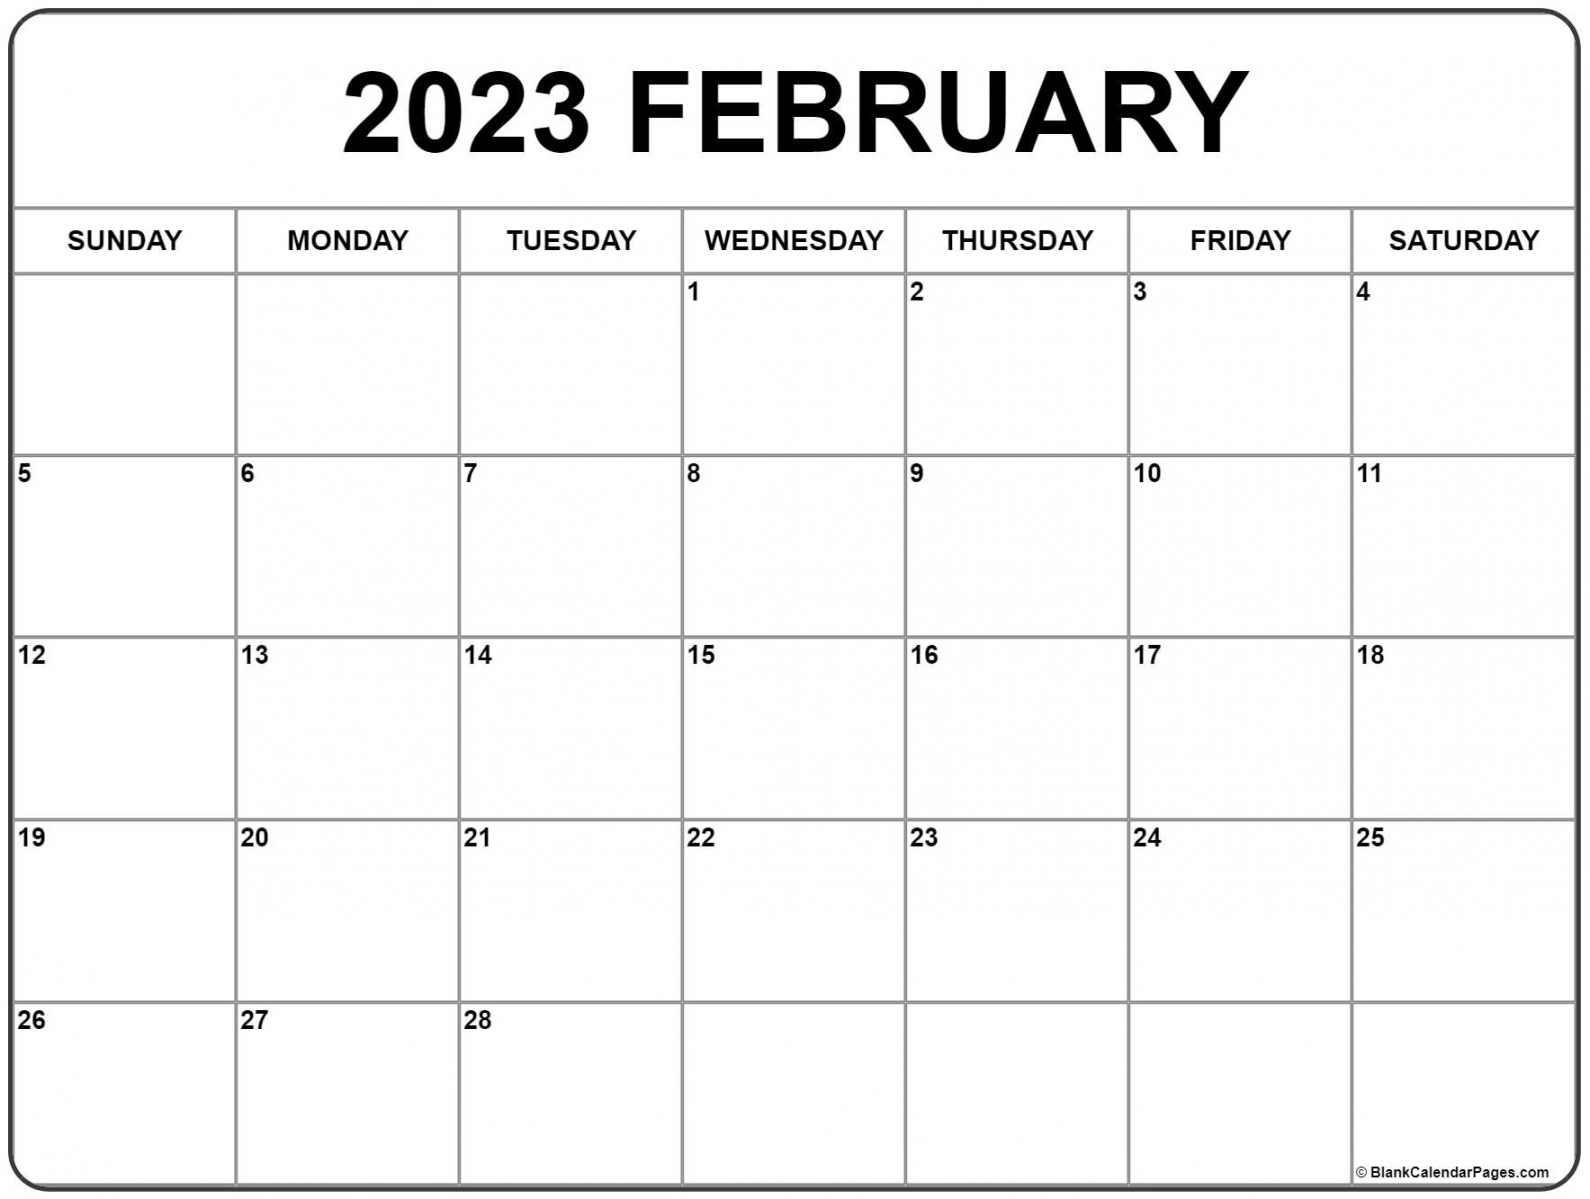 Free Printable February 2023 Calendar - Printable - February  calendar  free printable calendar